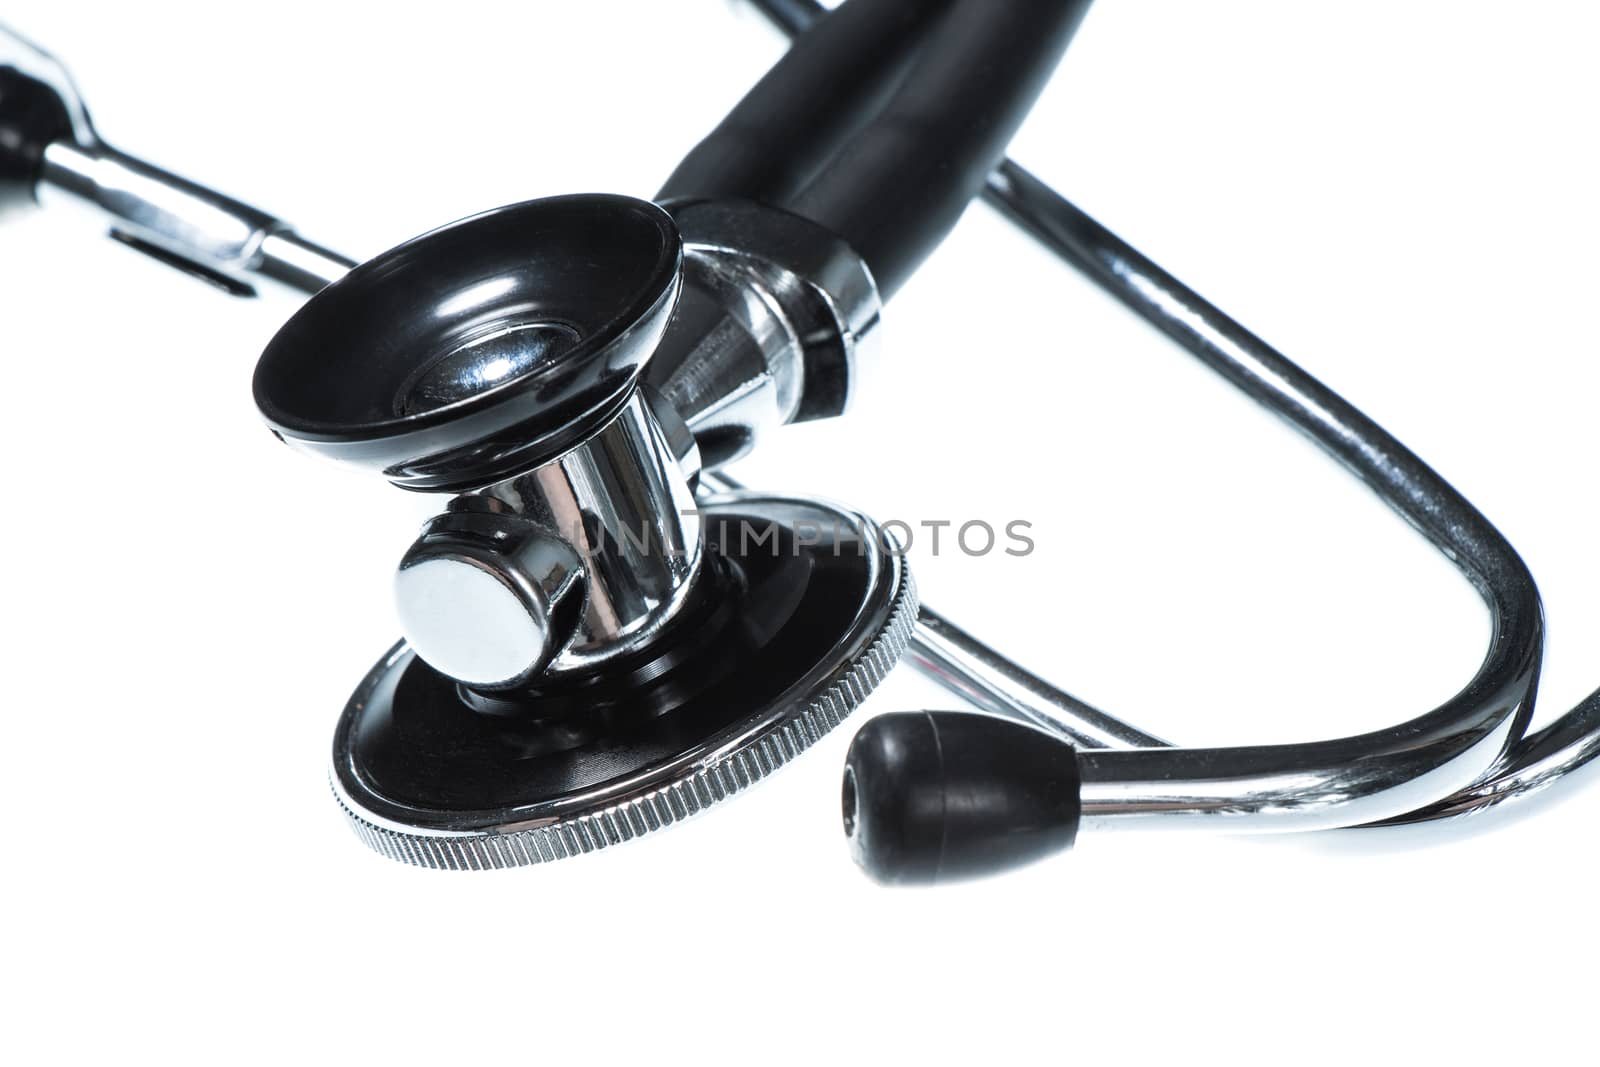 Stethoscope, close-up isolated with white background